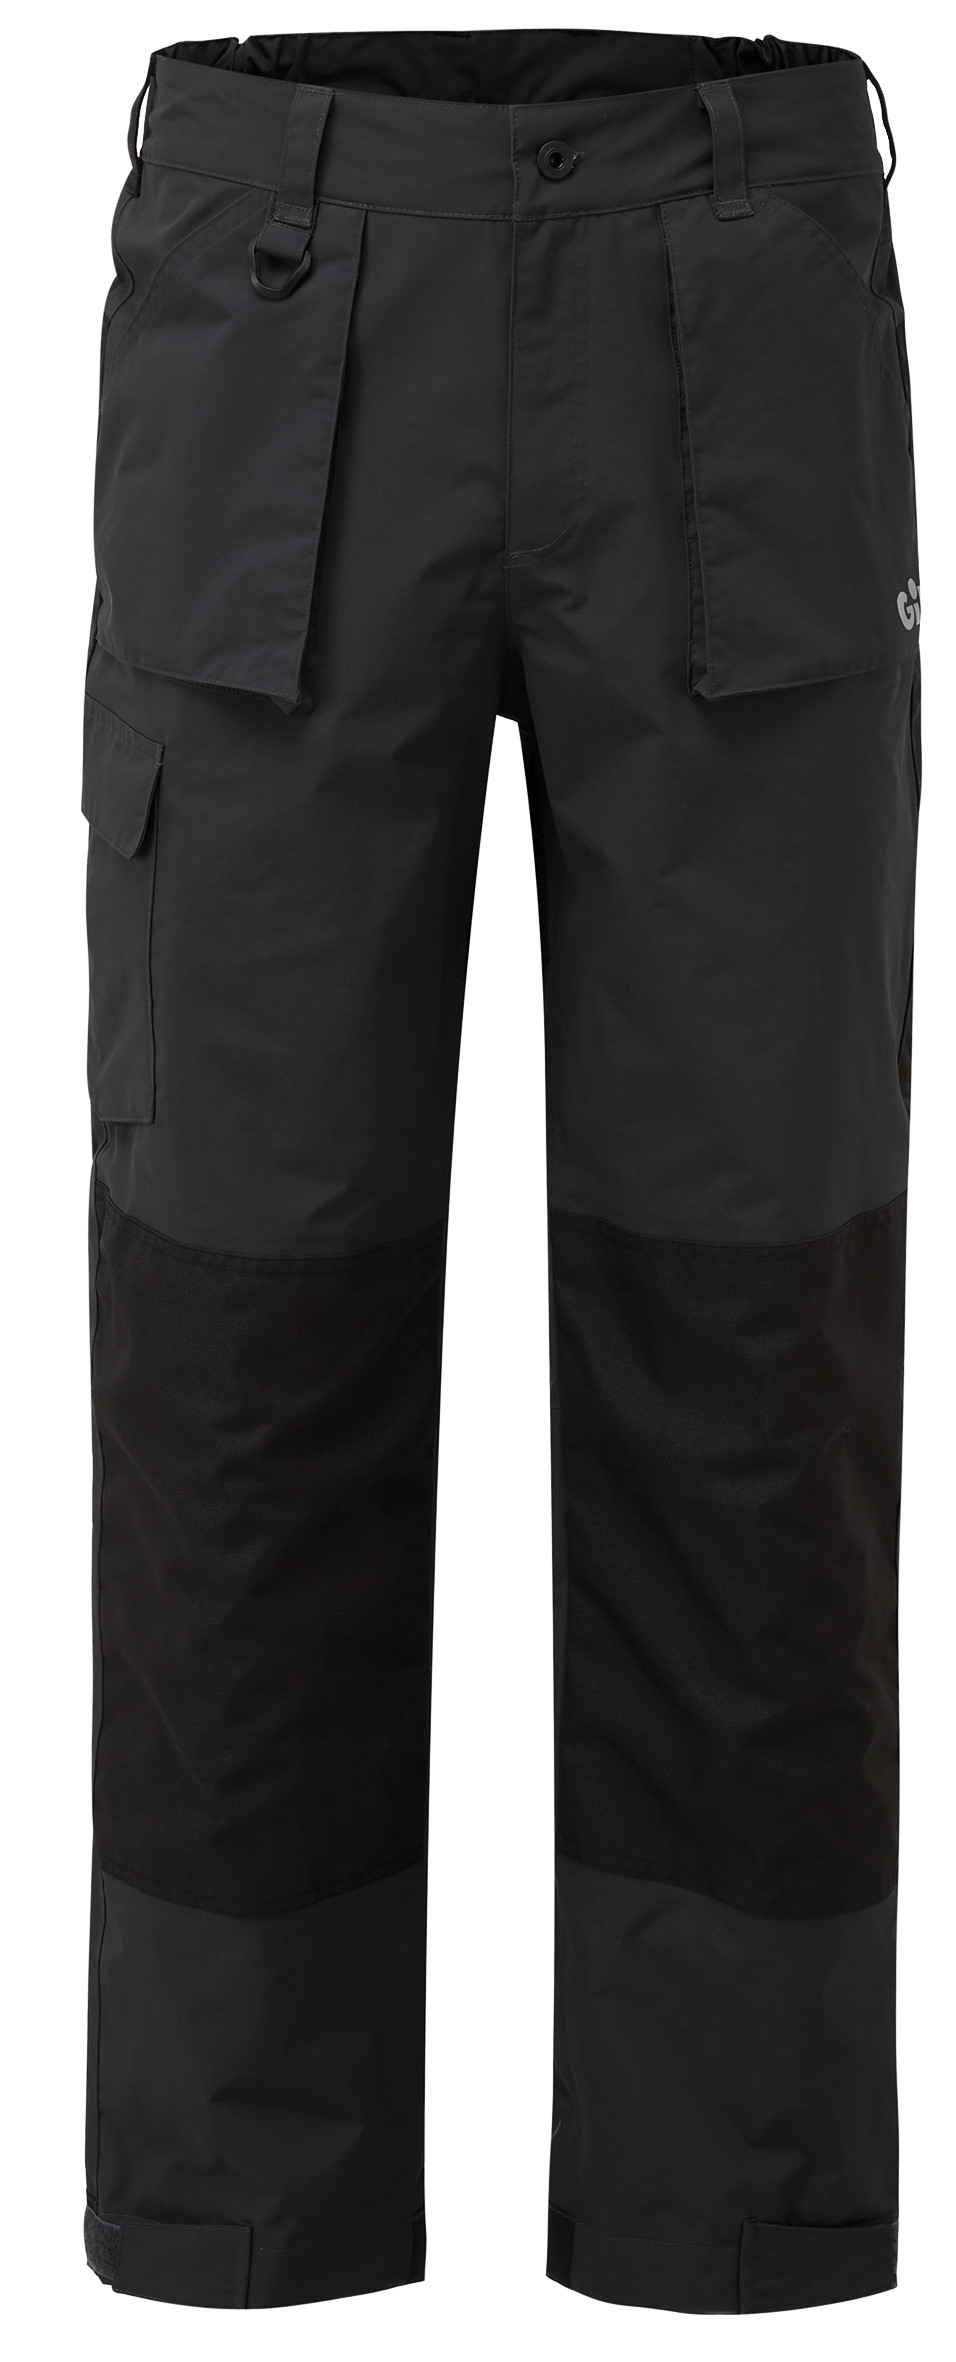 OS3 Coastal Trousers, Men